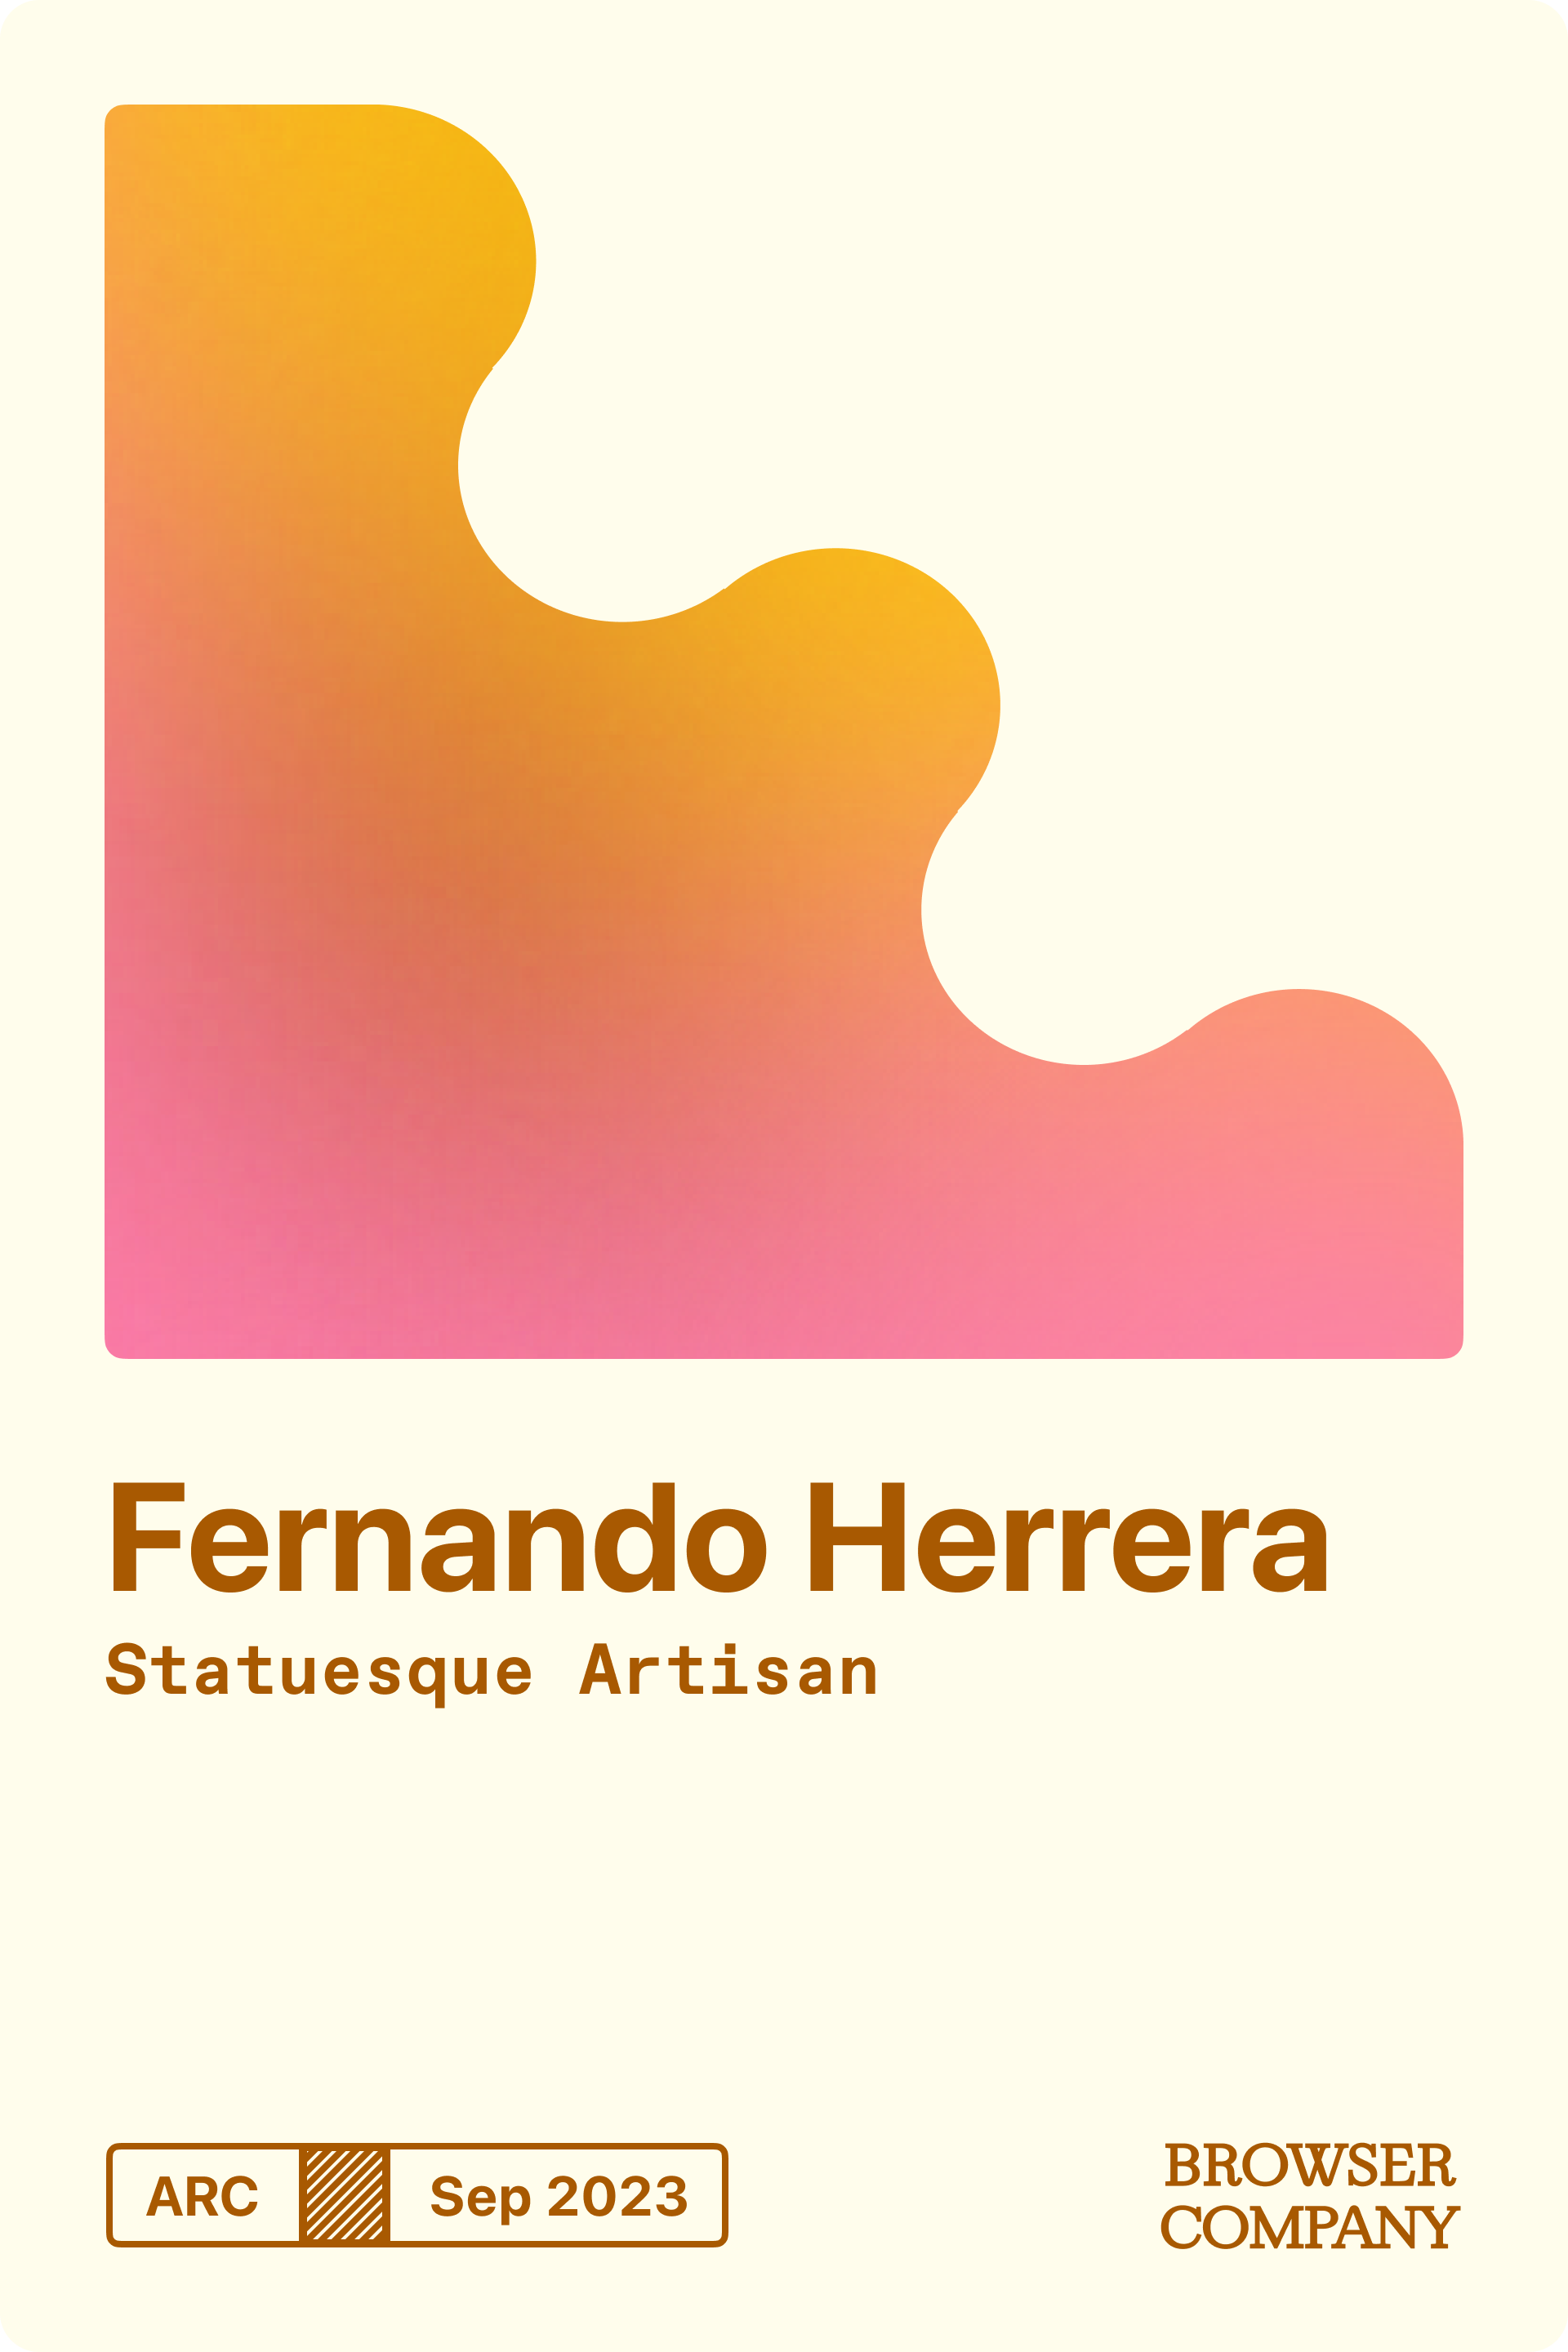 Fernando Herrera's Member Card